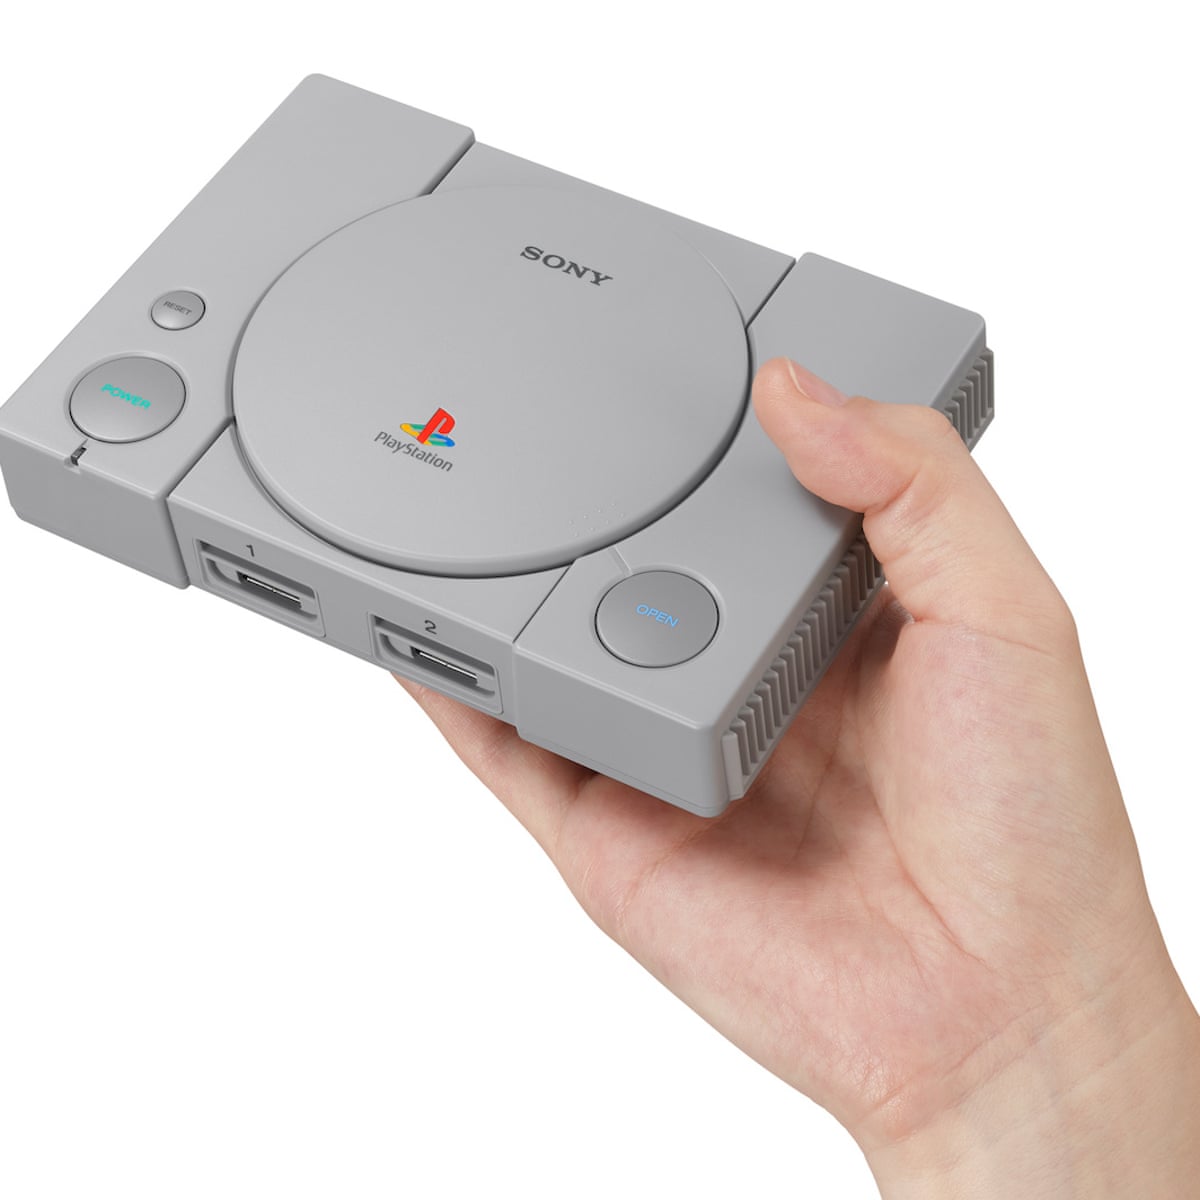 Sony announces PlayStation Classic mini console